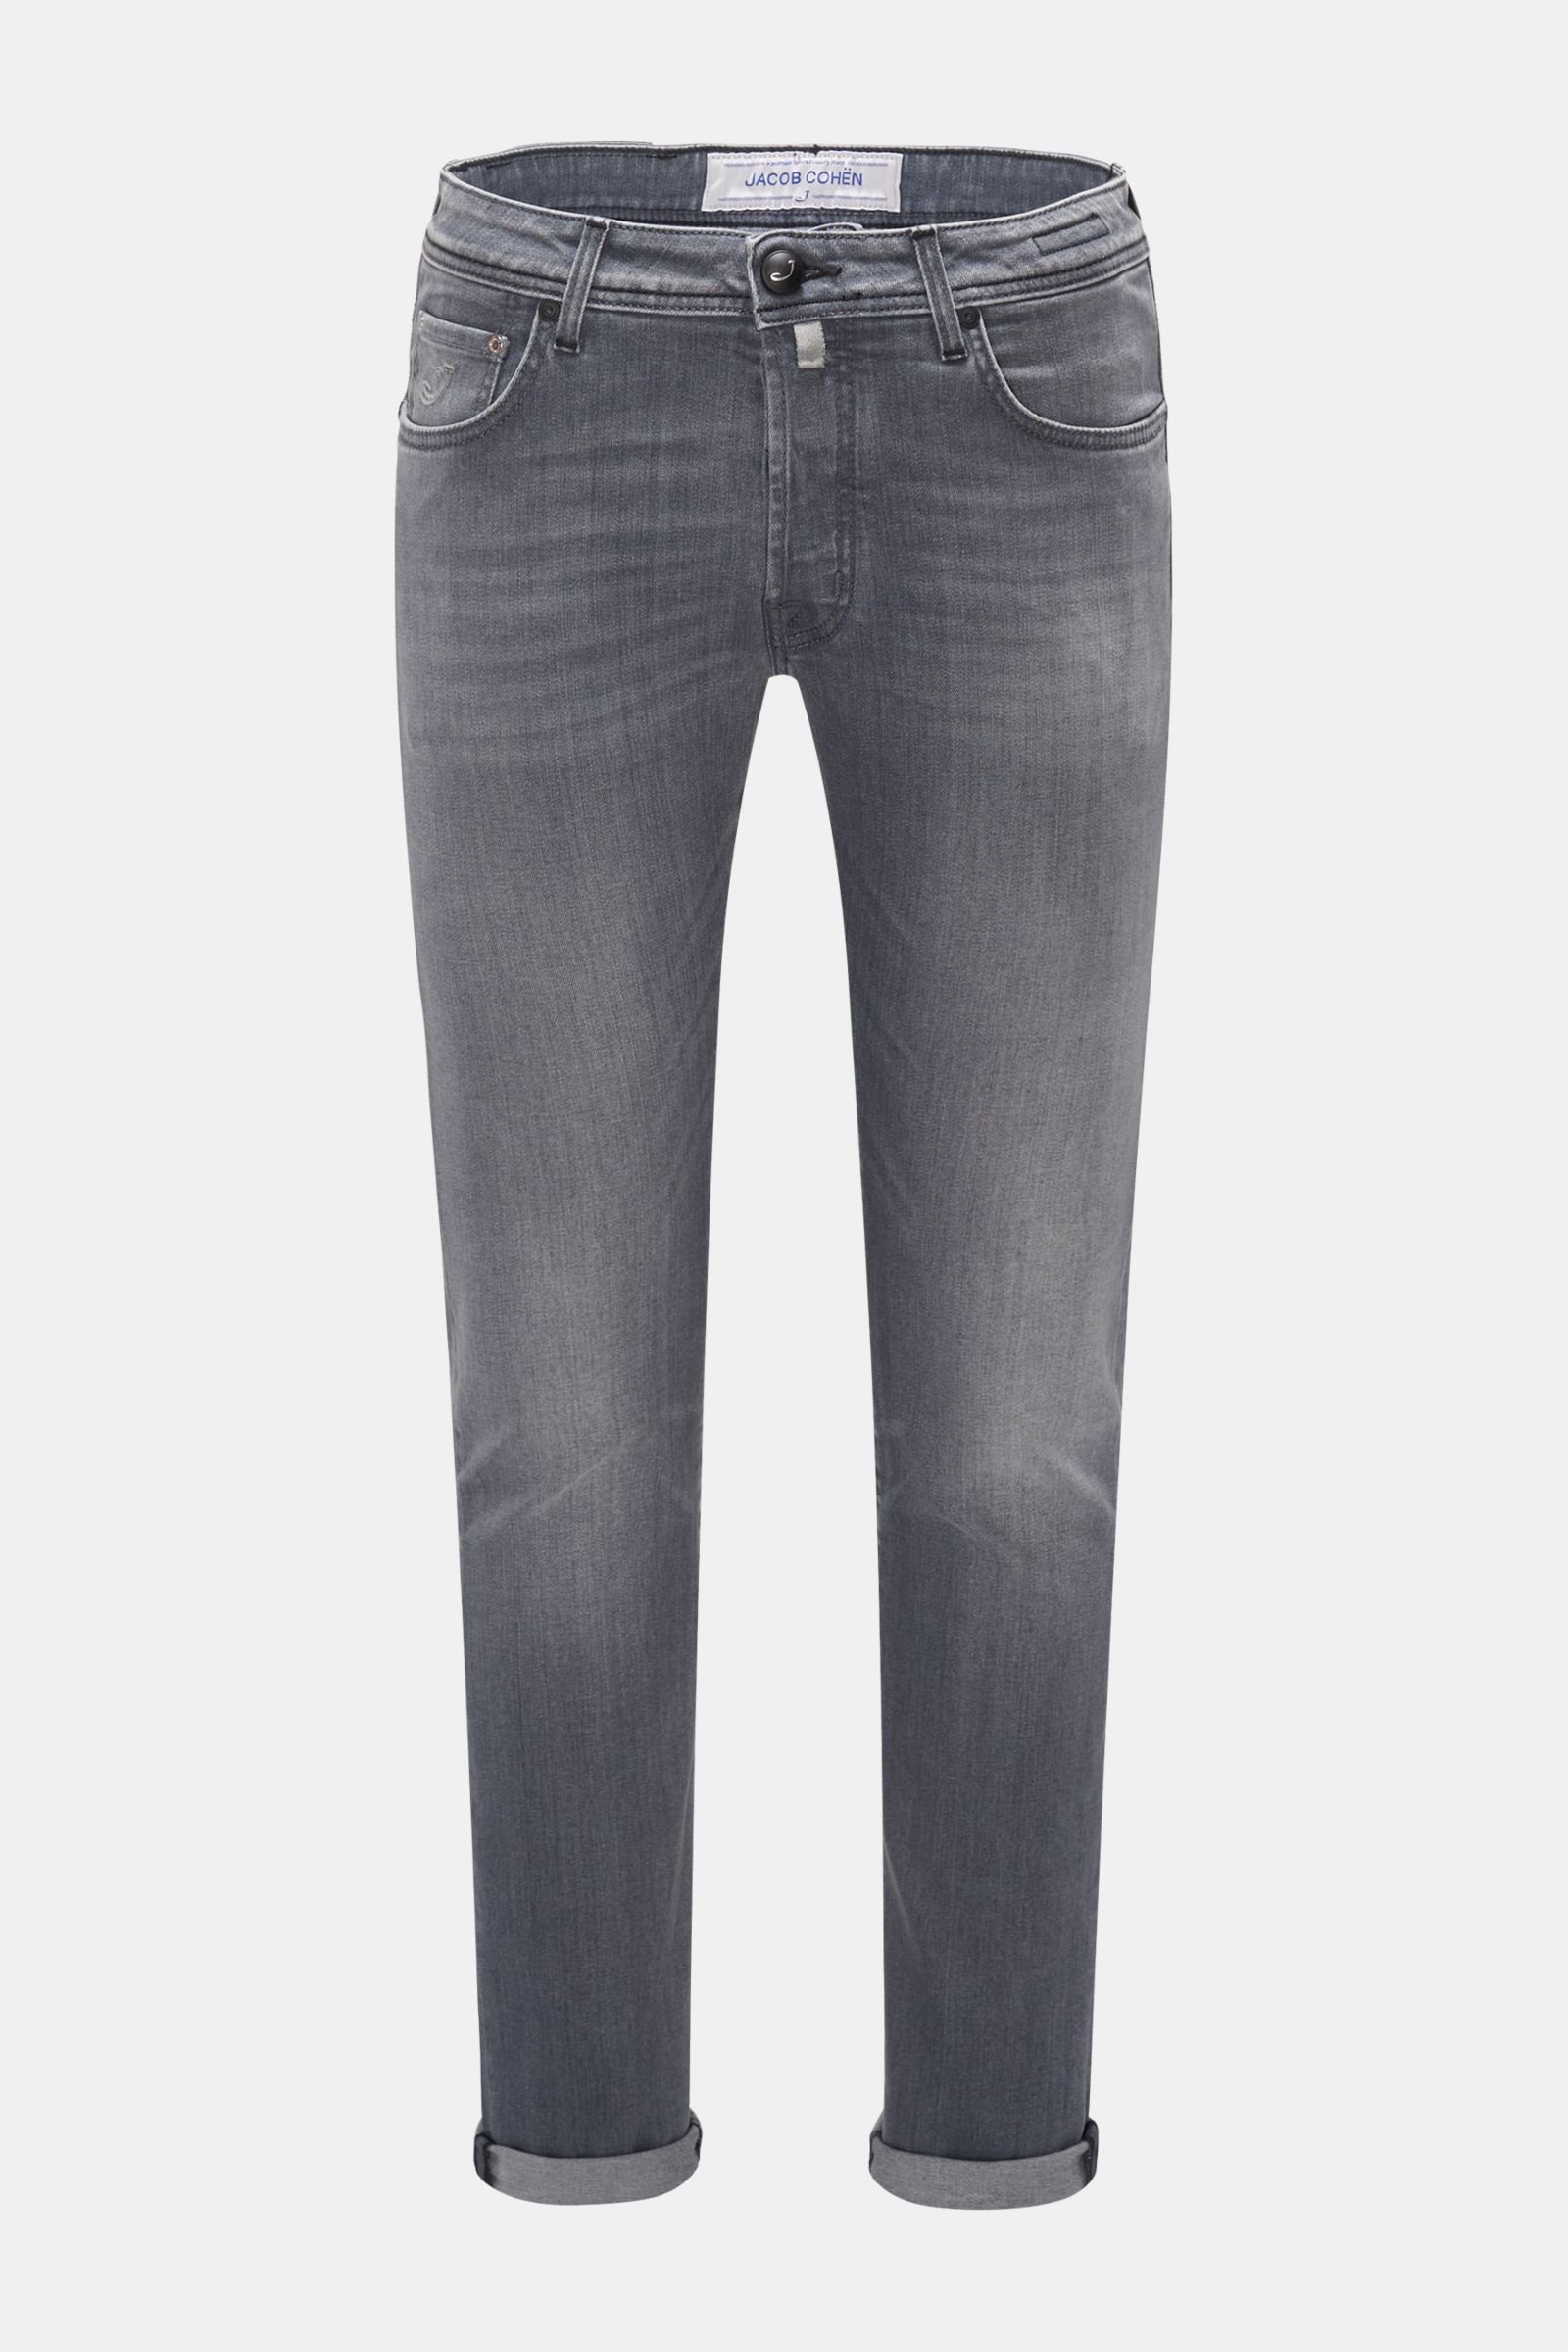 Jeans 'J688 Comfort Extra Slim Fit' grey